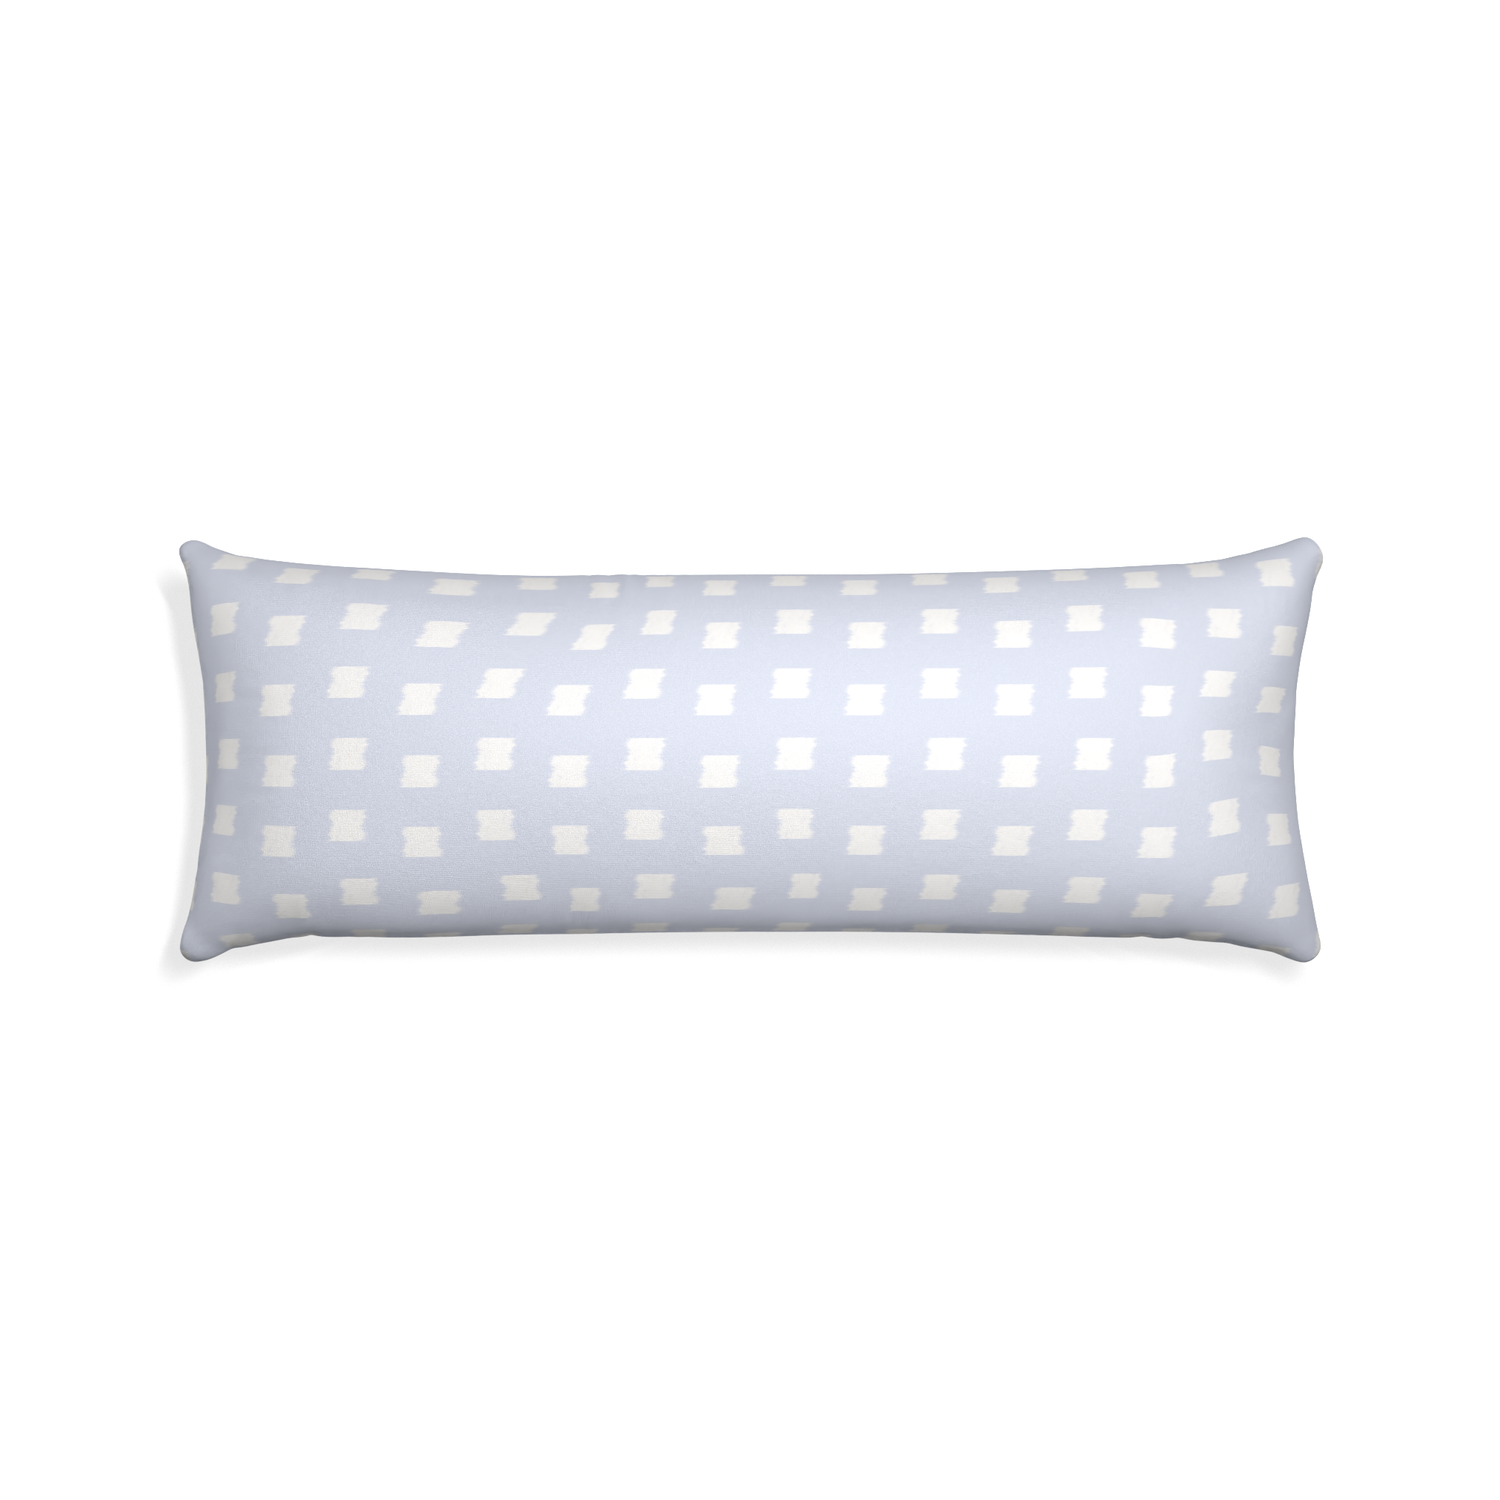 Xl-lumbar denton custom pillow with none on white background